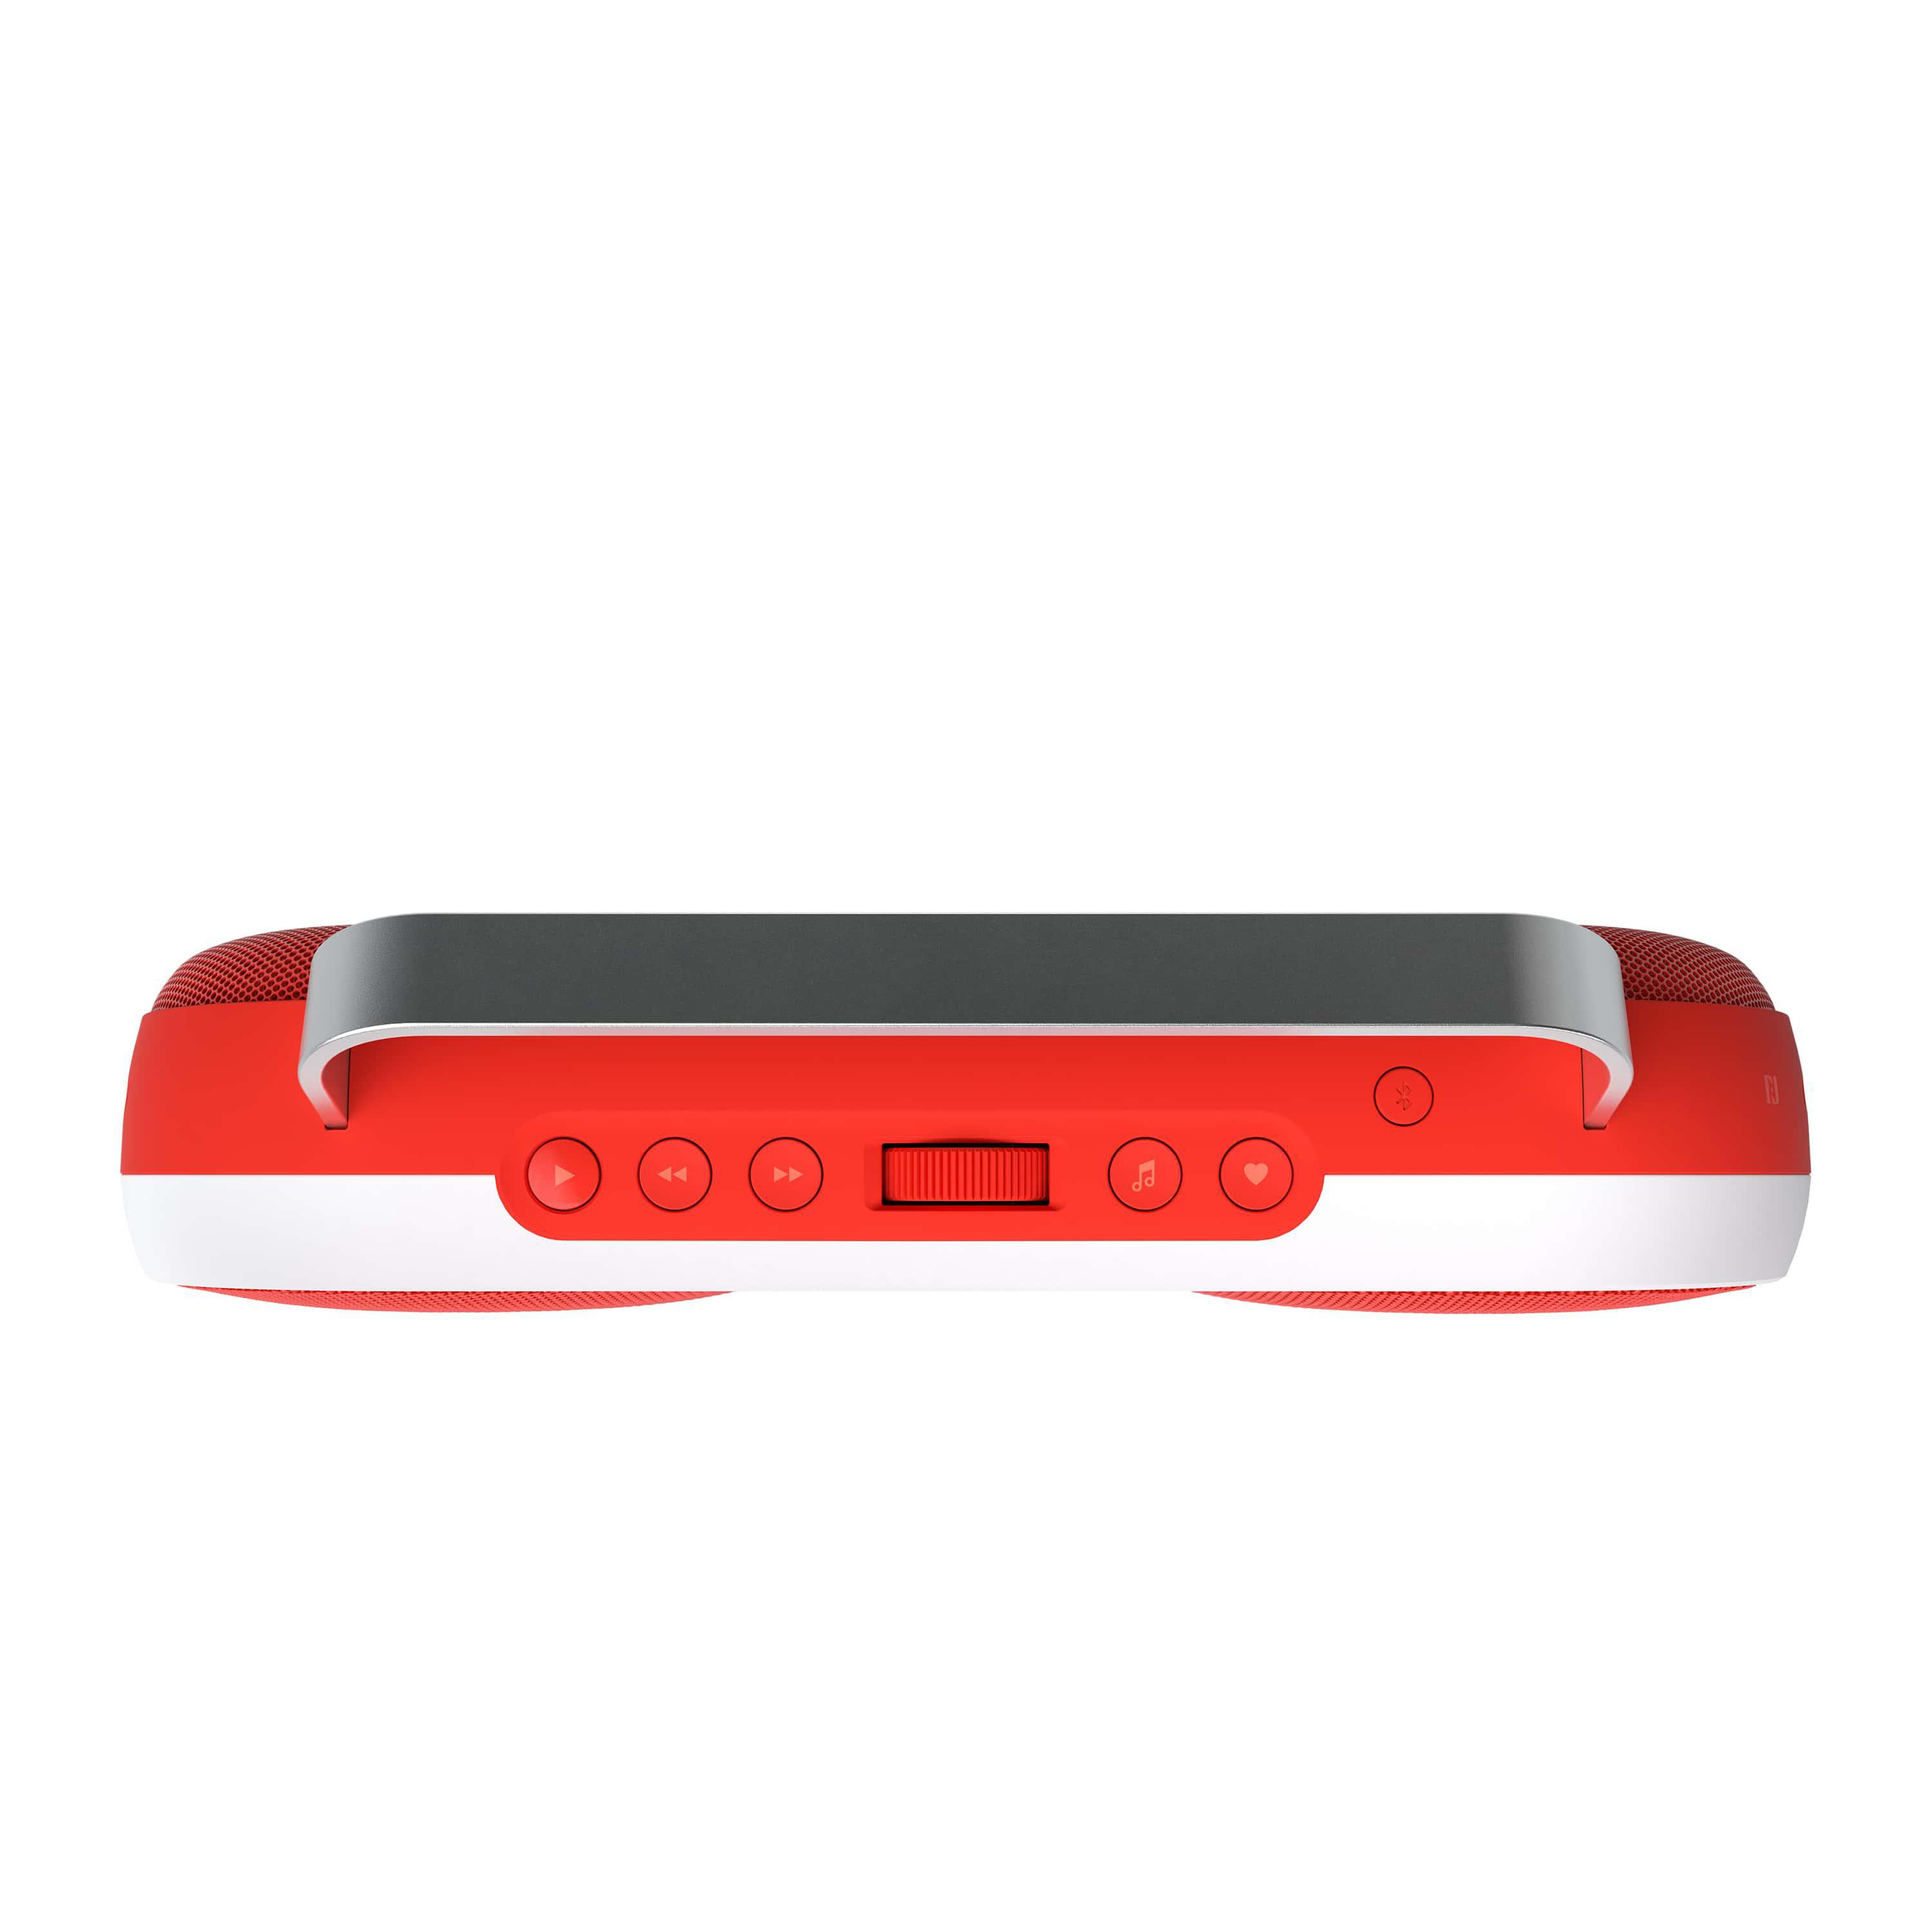 POLAROID P3 Music Player Bluetooth , Rot/Weiß Lautsprecher